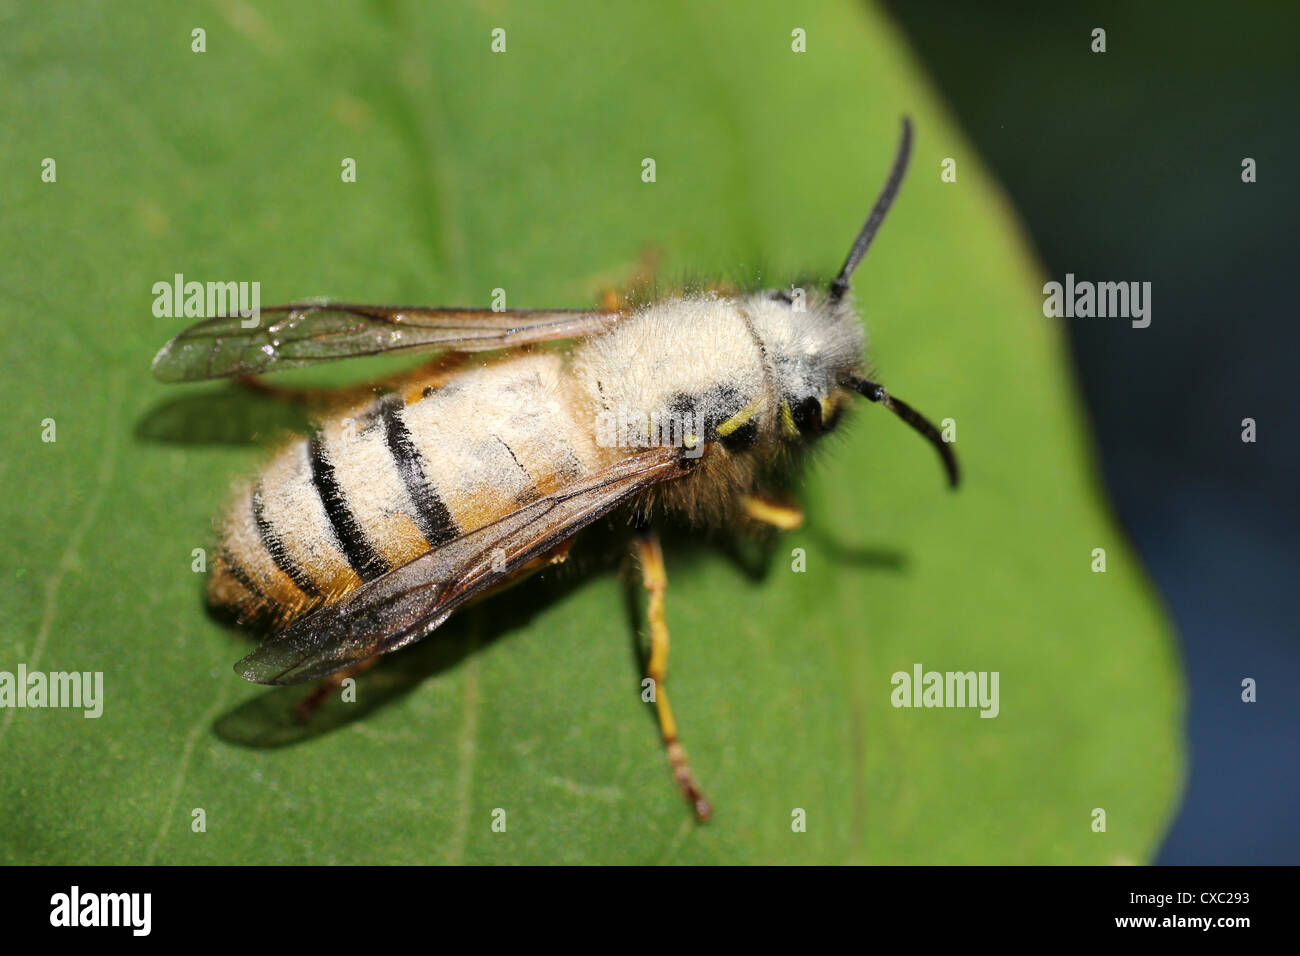 Common Wasp Vespula vulgaris Covered In Pollen From Himalayan Balsam Impatiens glandulifera Stock Photo